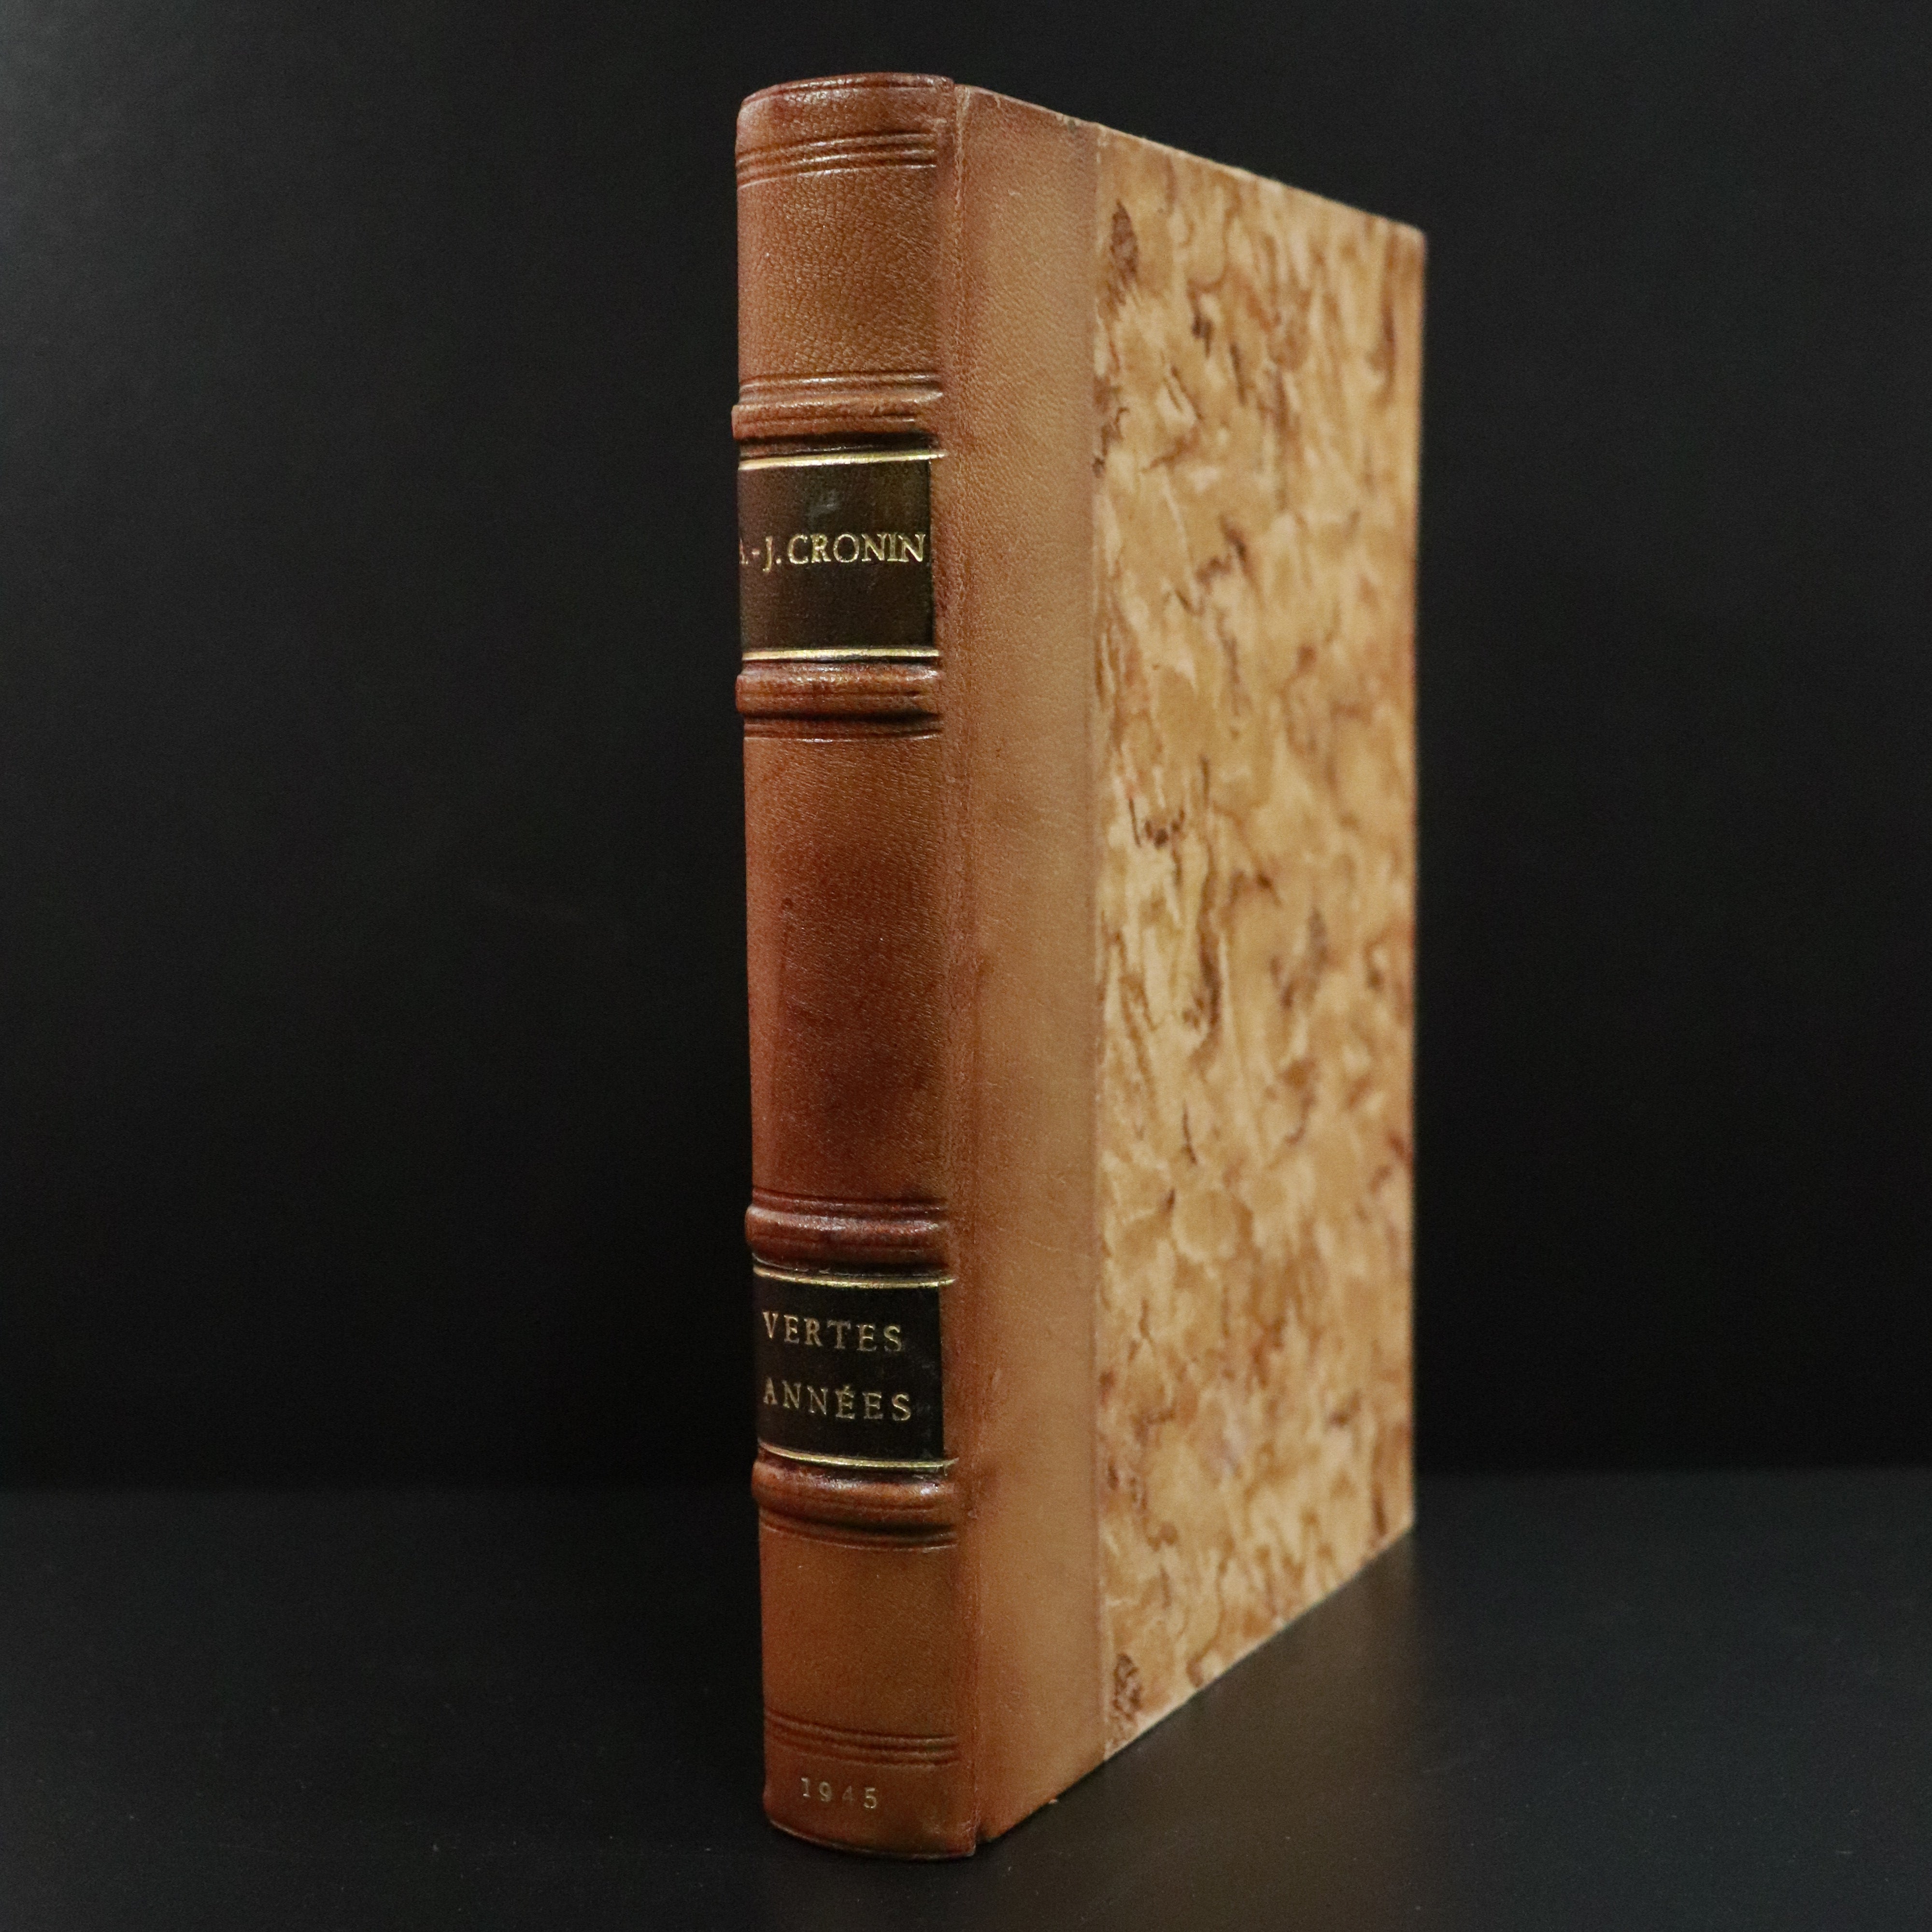 1945 Les Vertes Annees by AJ Cronin Ltd Edition French Fiction Book Fine Binding